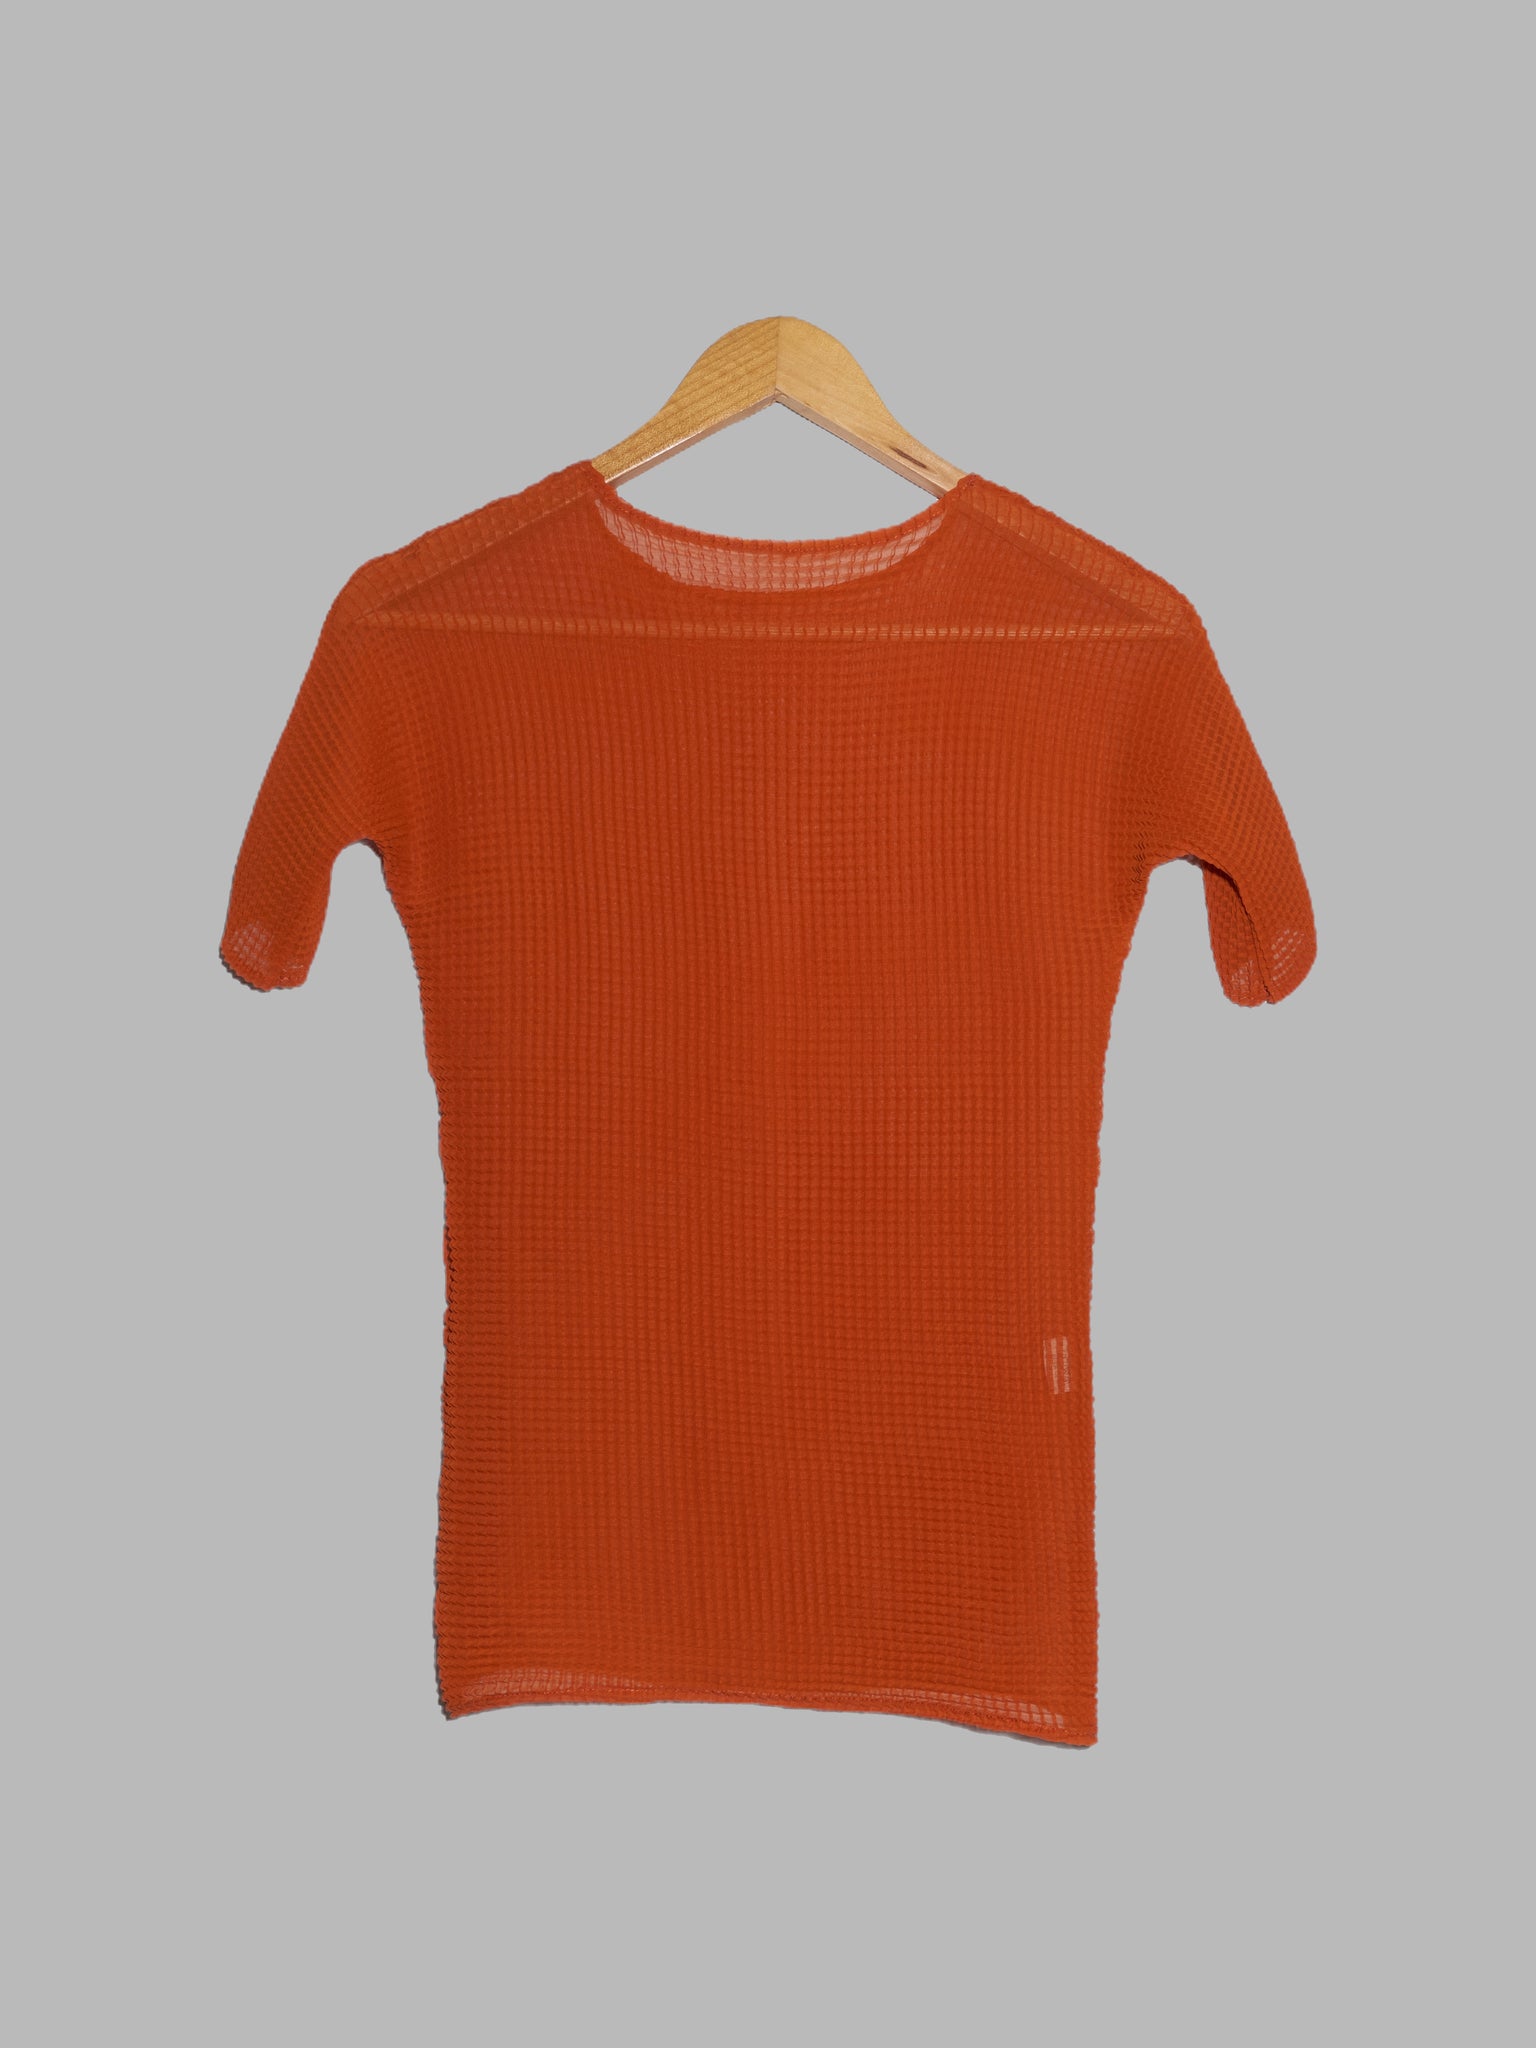 Jeff Gallano Paris orange pleated polyester t-shirt